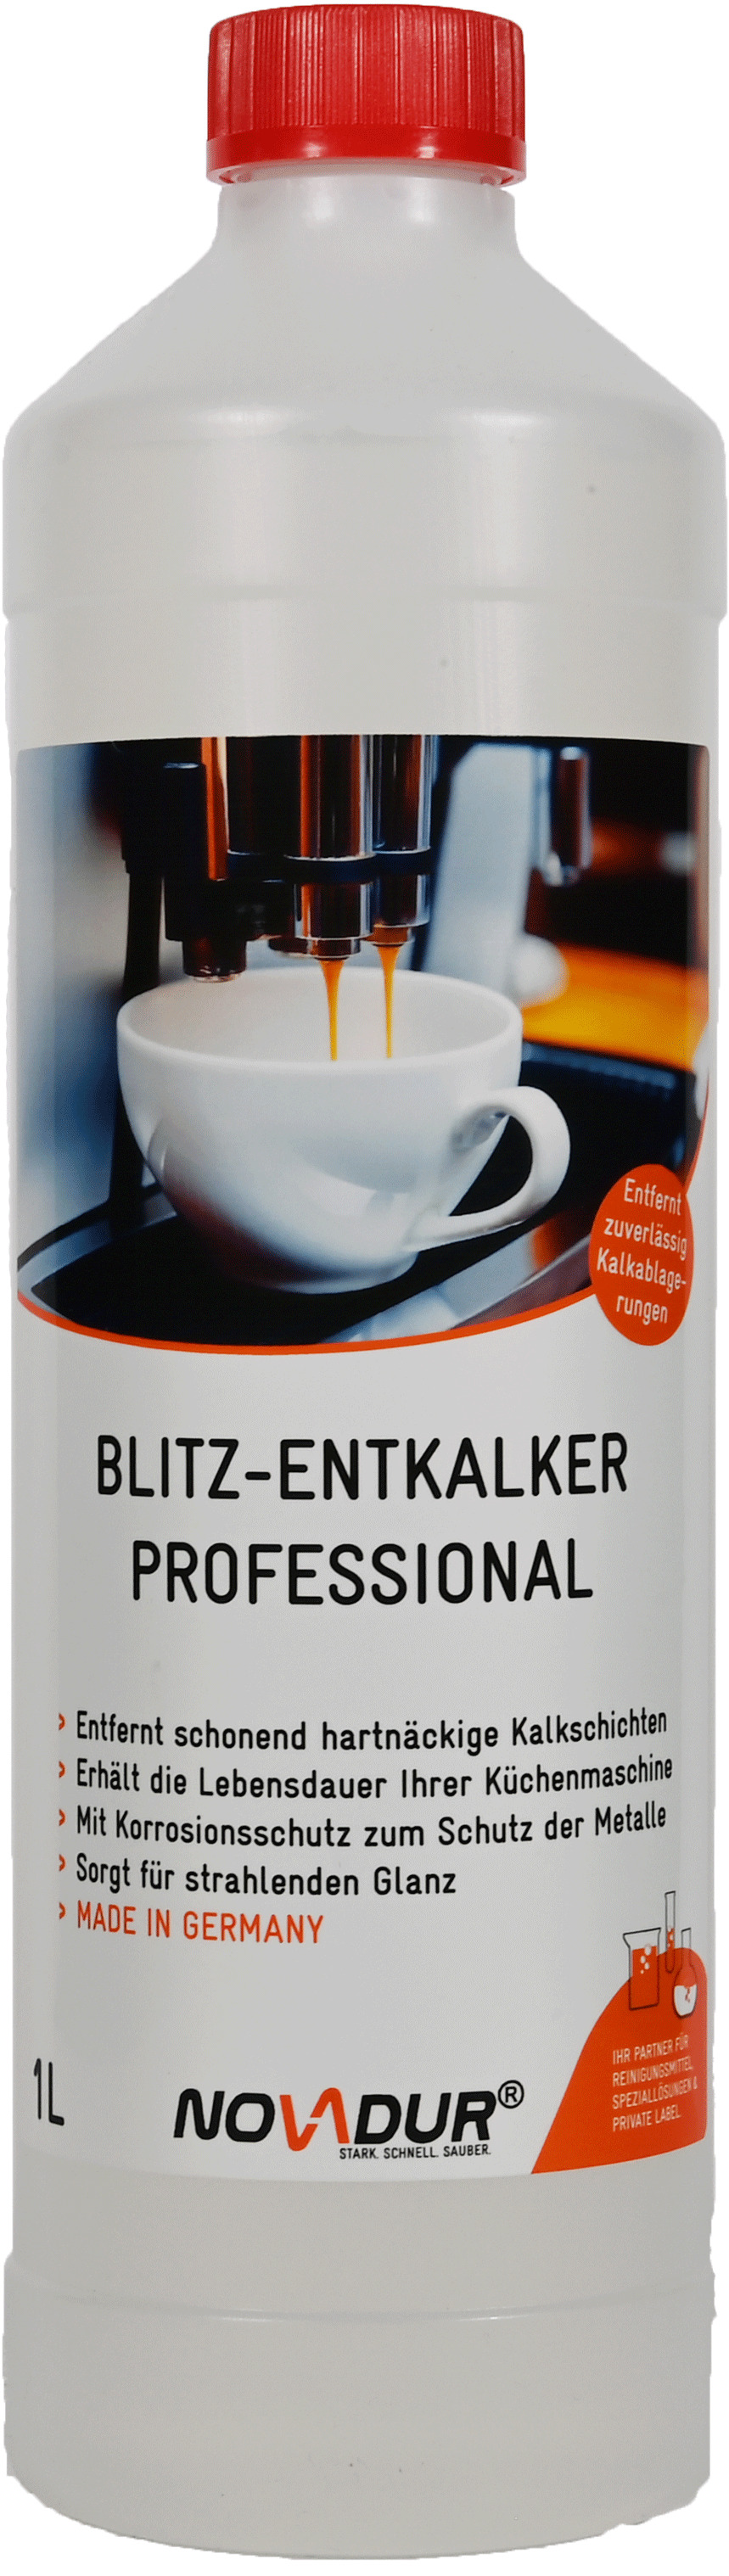 Blitz-Entkalker Professional